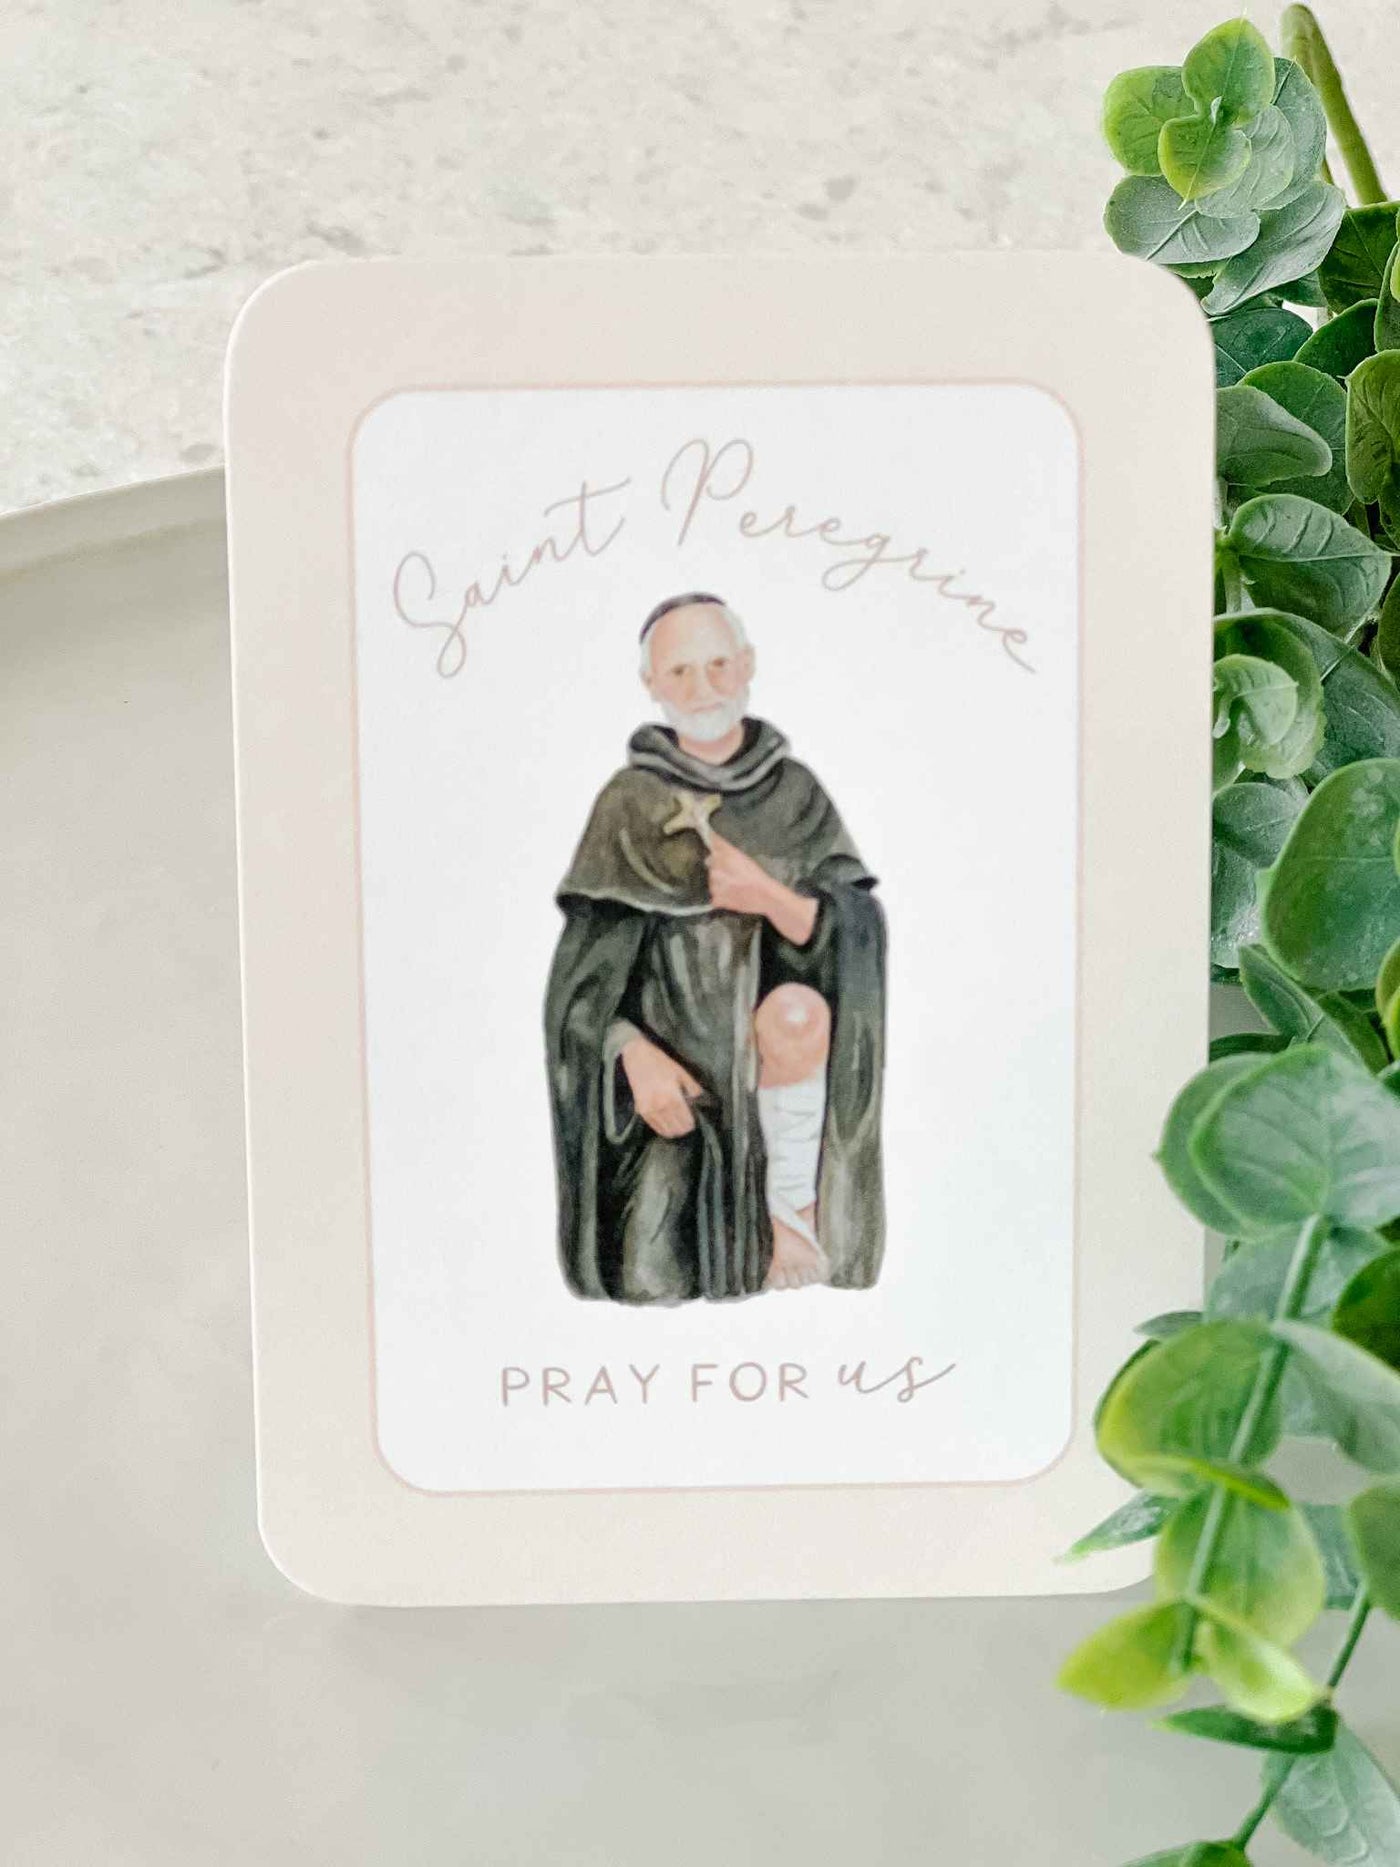 St. Peregrine - Prayer Card